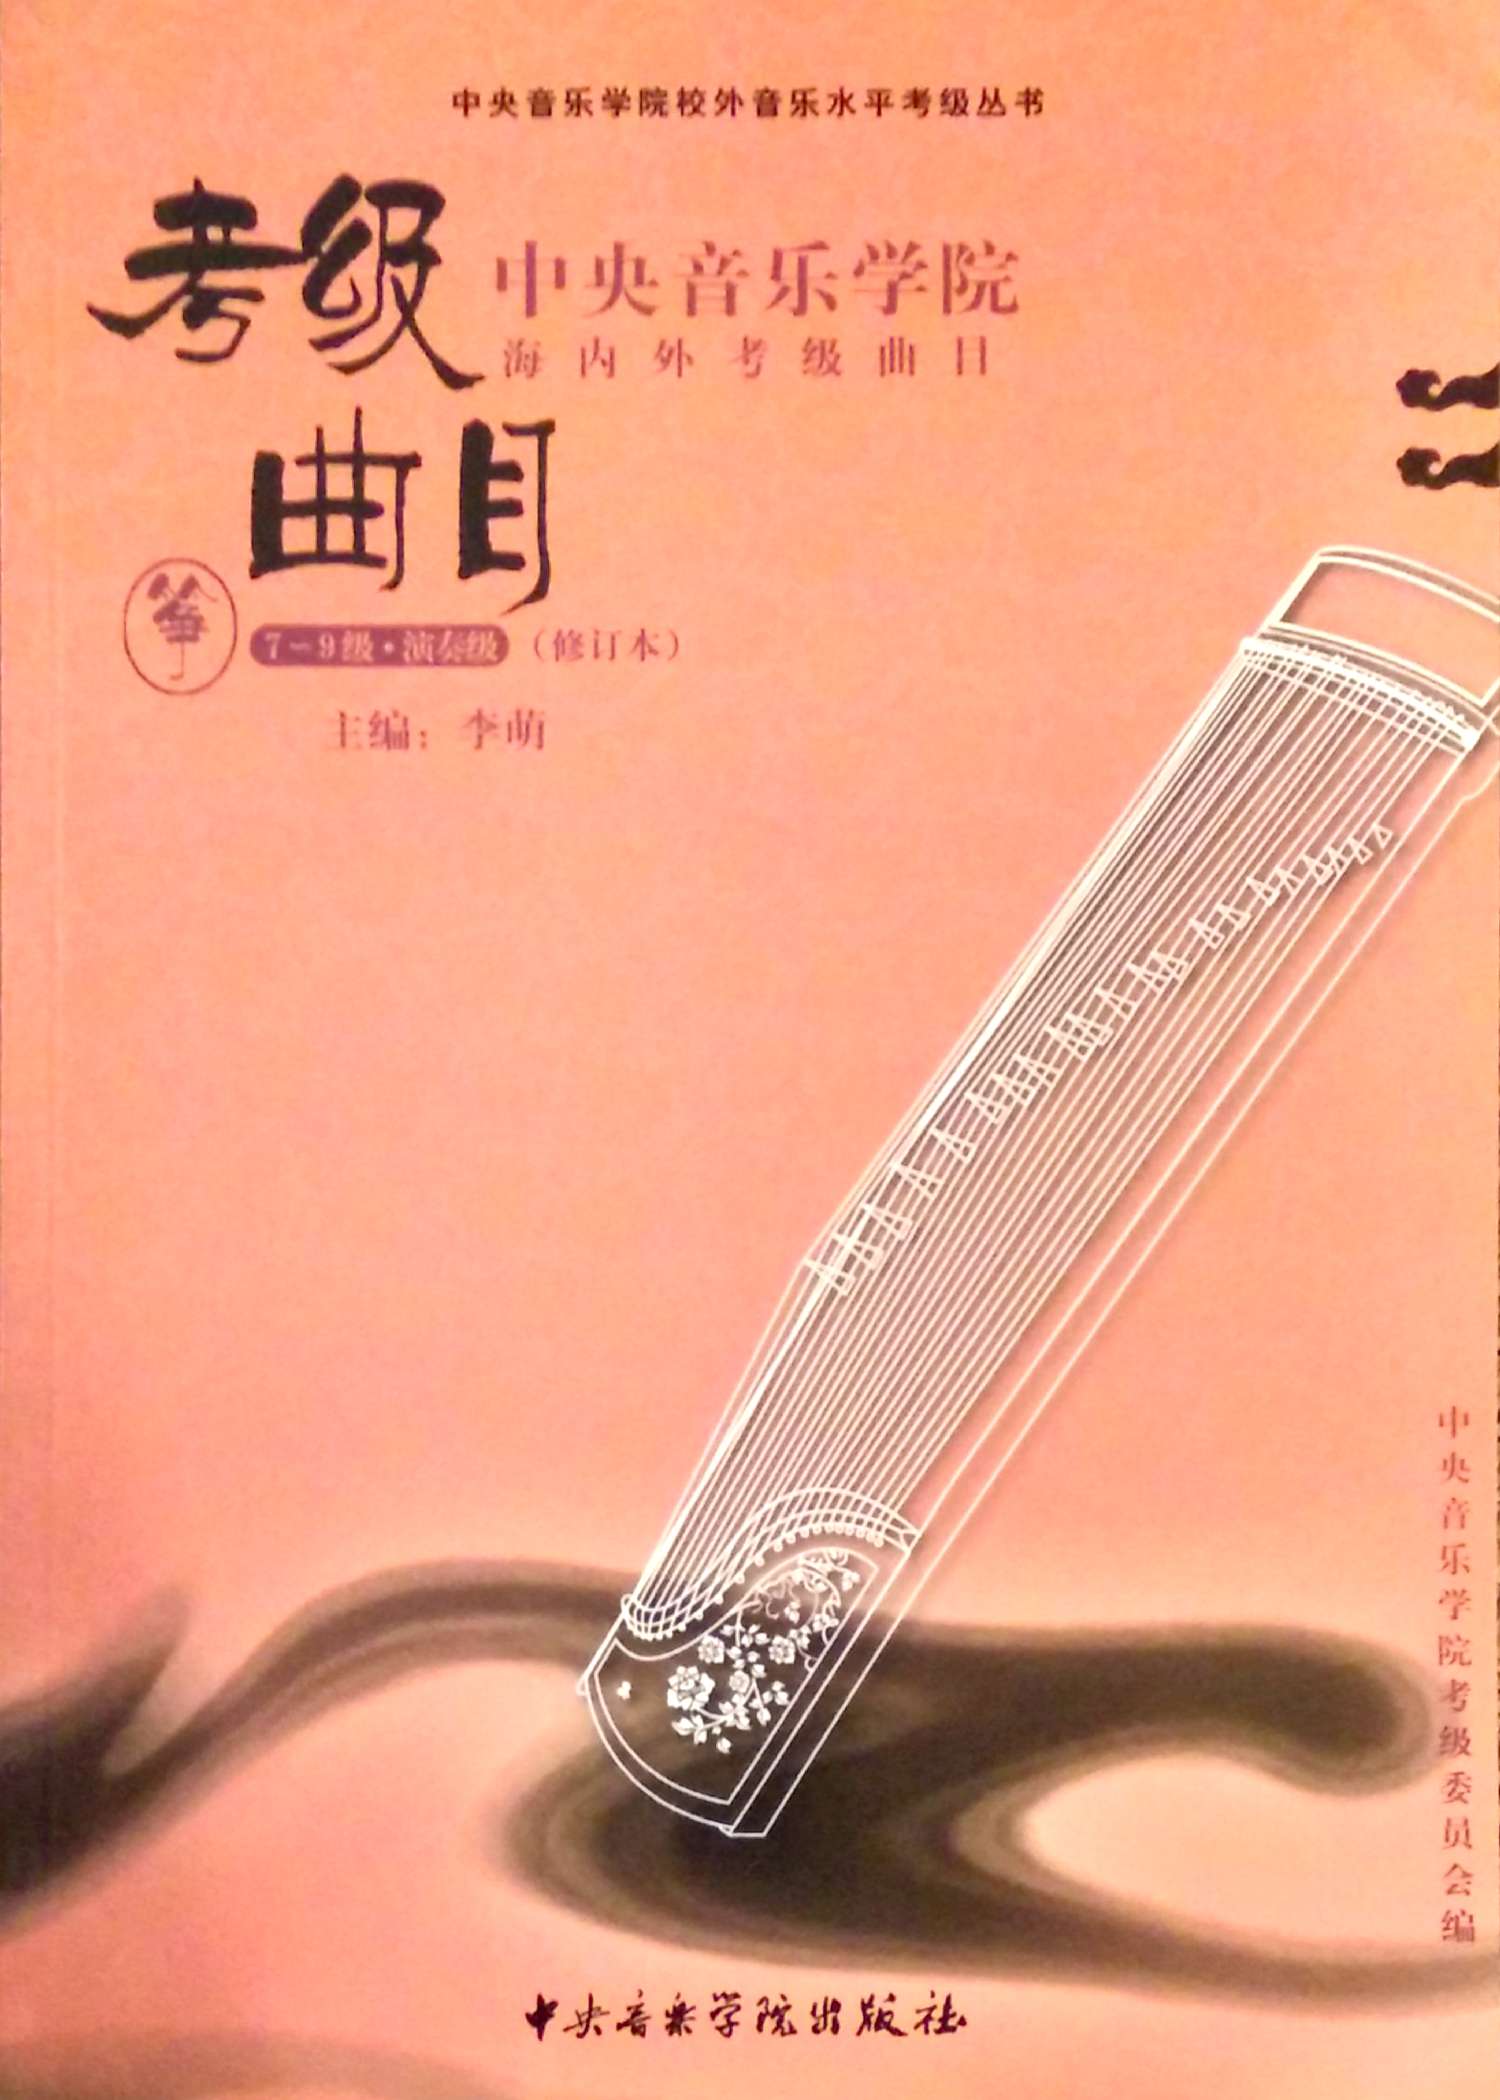 China Central Conservatory of Music Gu Zheng Grade Exams book 2 (level 7-  performance diploma)中央音樂學院海內外考級曲目古箏7到演奏文憑級